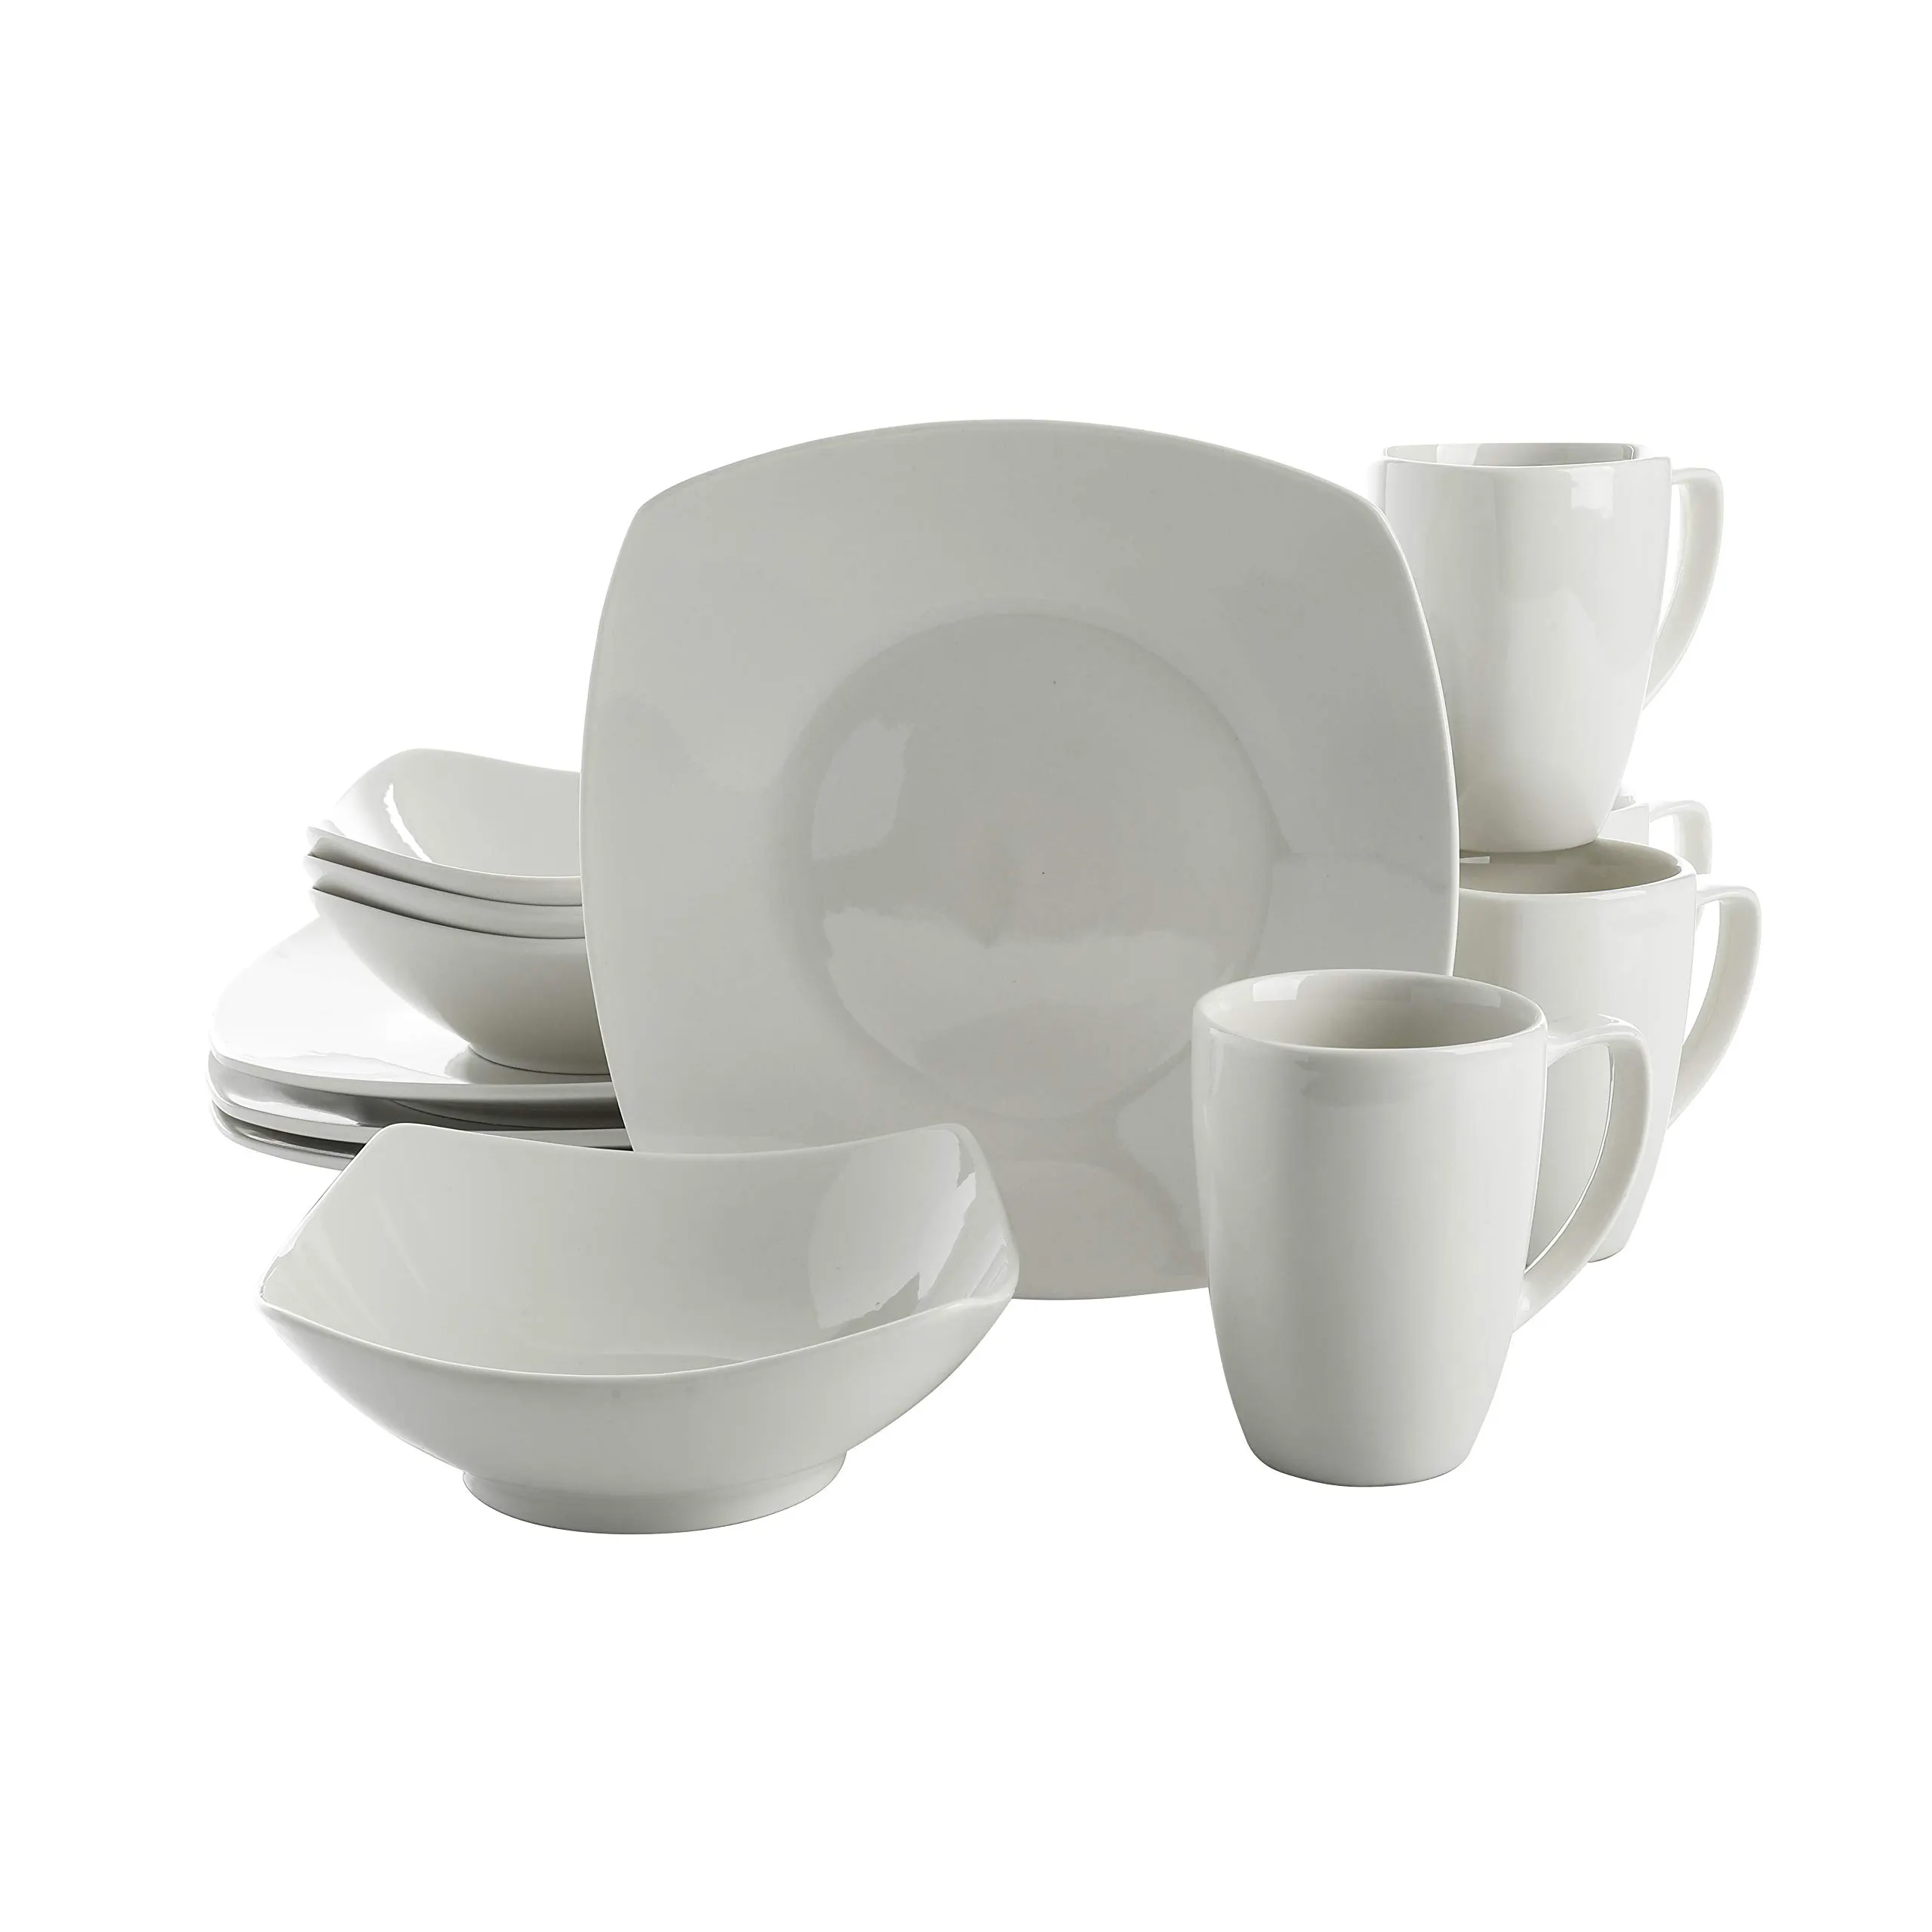 16pcs Ceramic Dinner Set White Square Shape Dinnerware Set for Gift Premium Quality Porcelain Plate Bowl Mugs